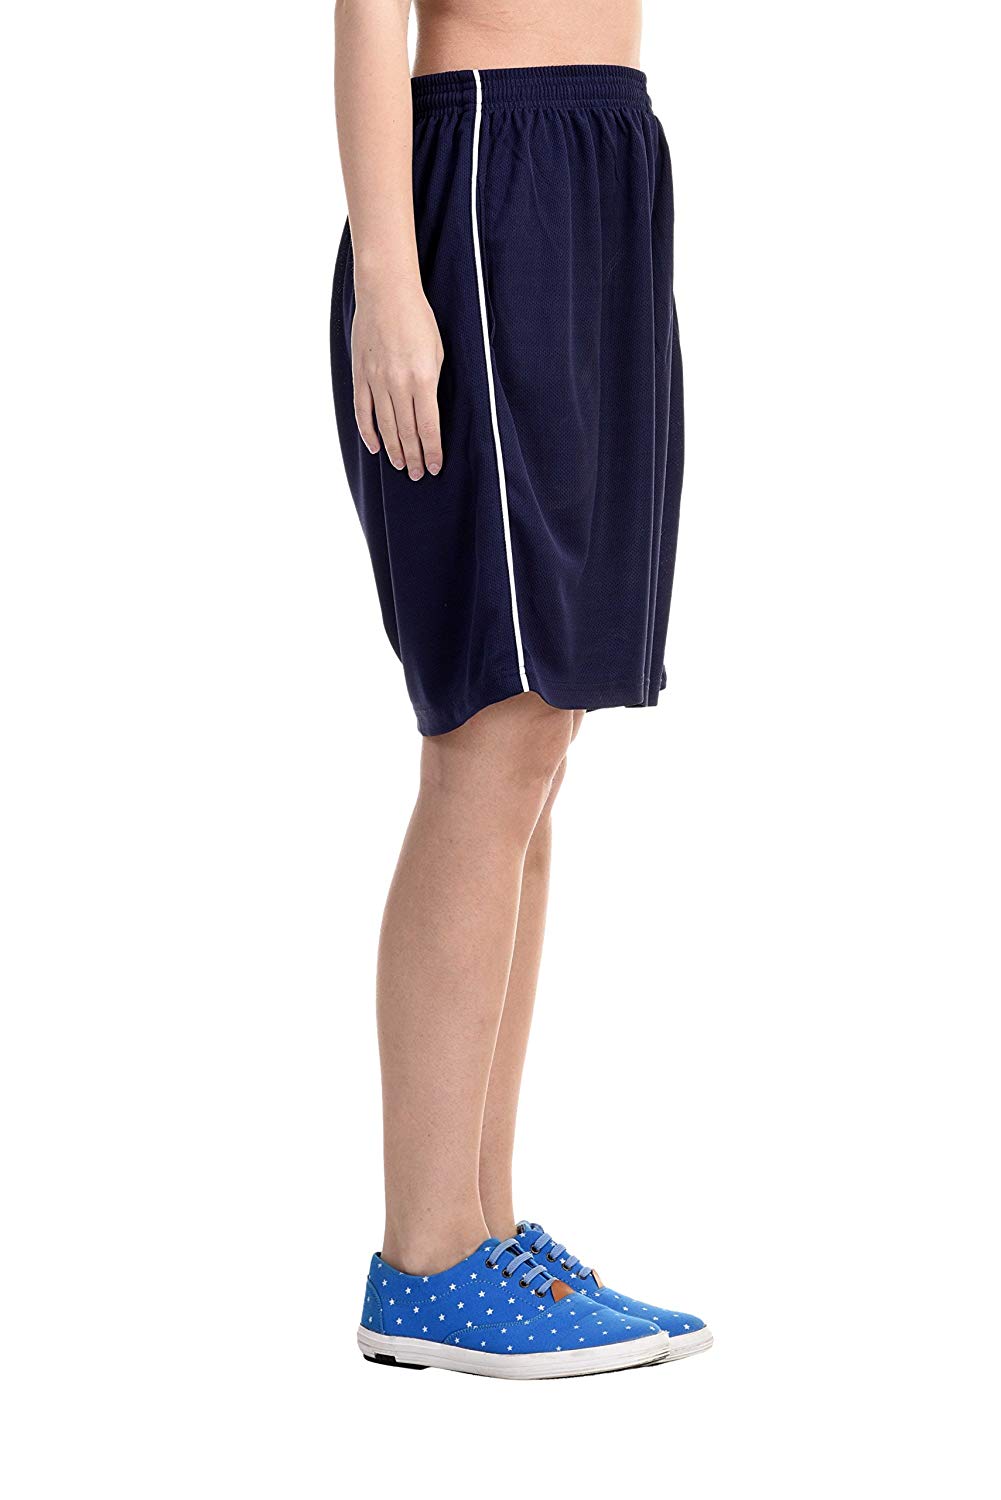 Dee Mannequin Jolly Cotton Shorts for Female Set of 3 (White / Navy Blue / Black)